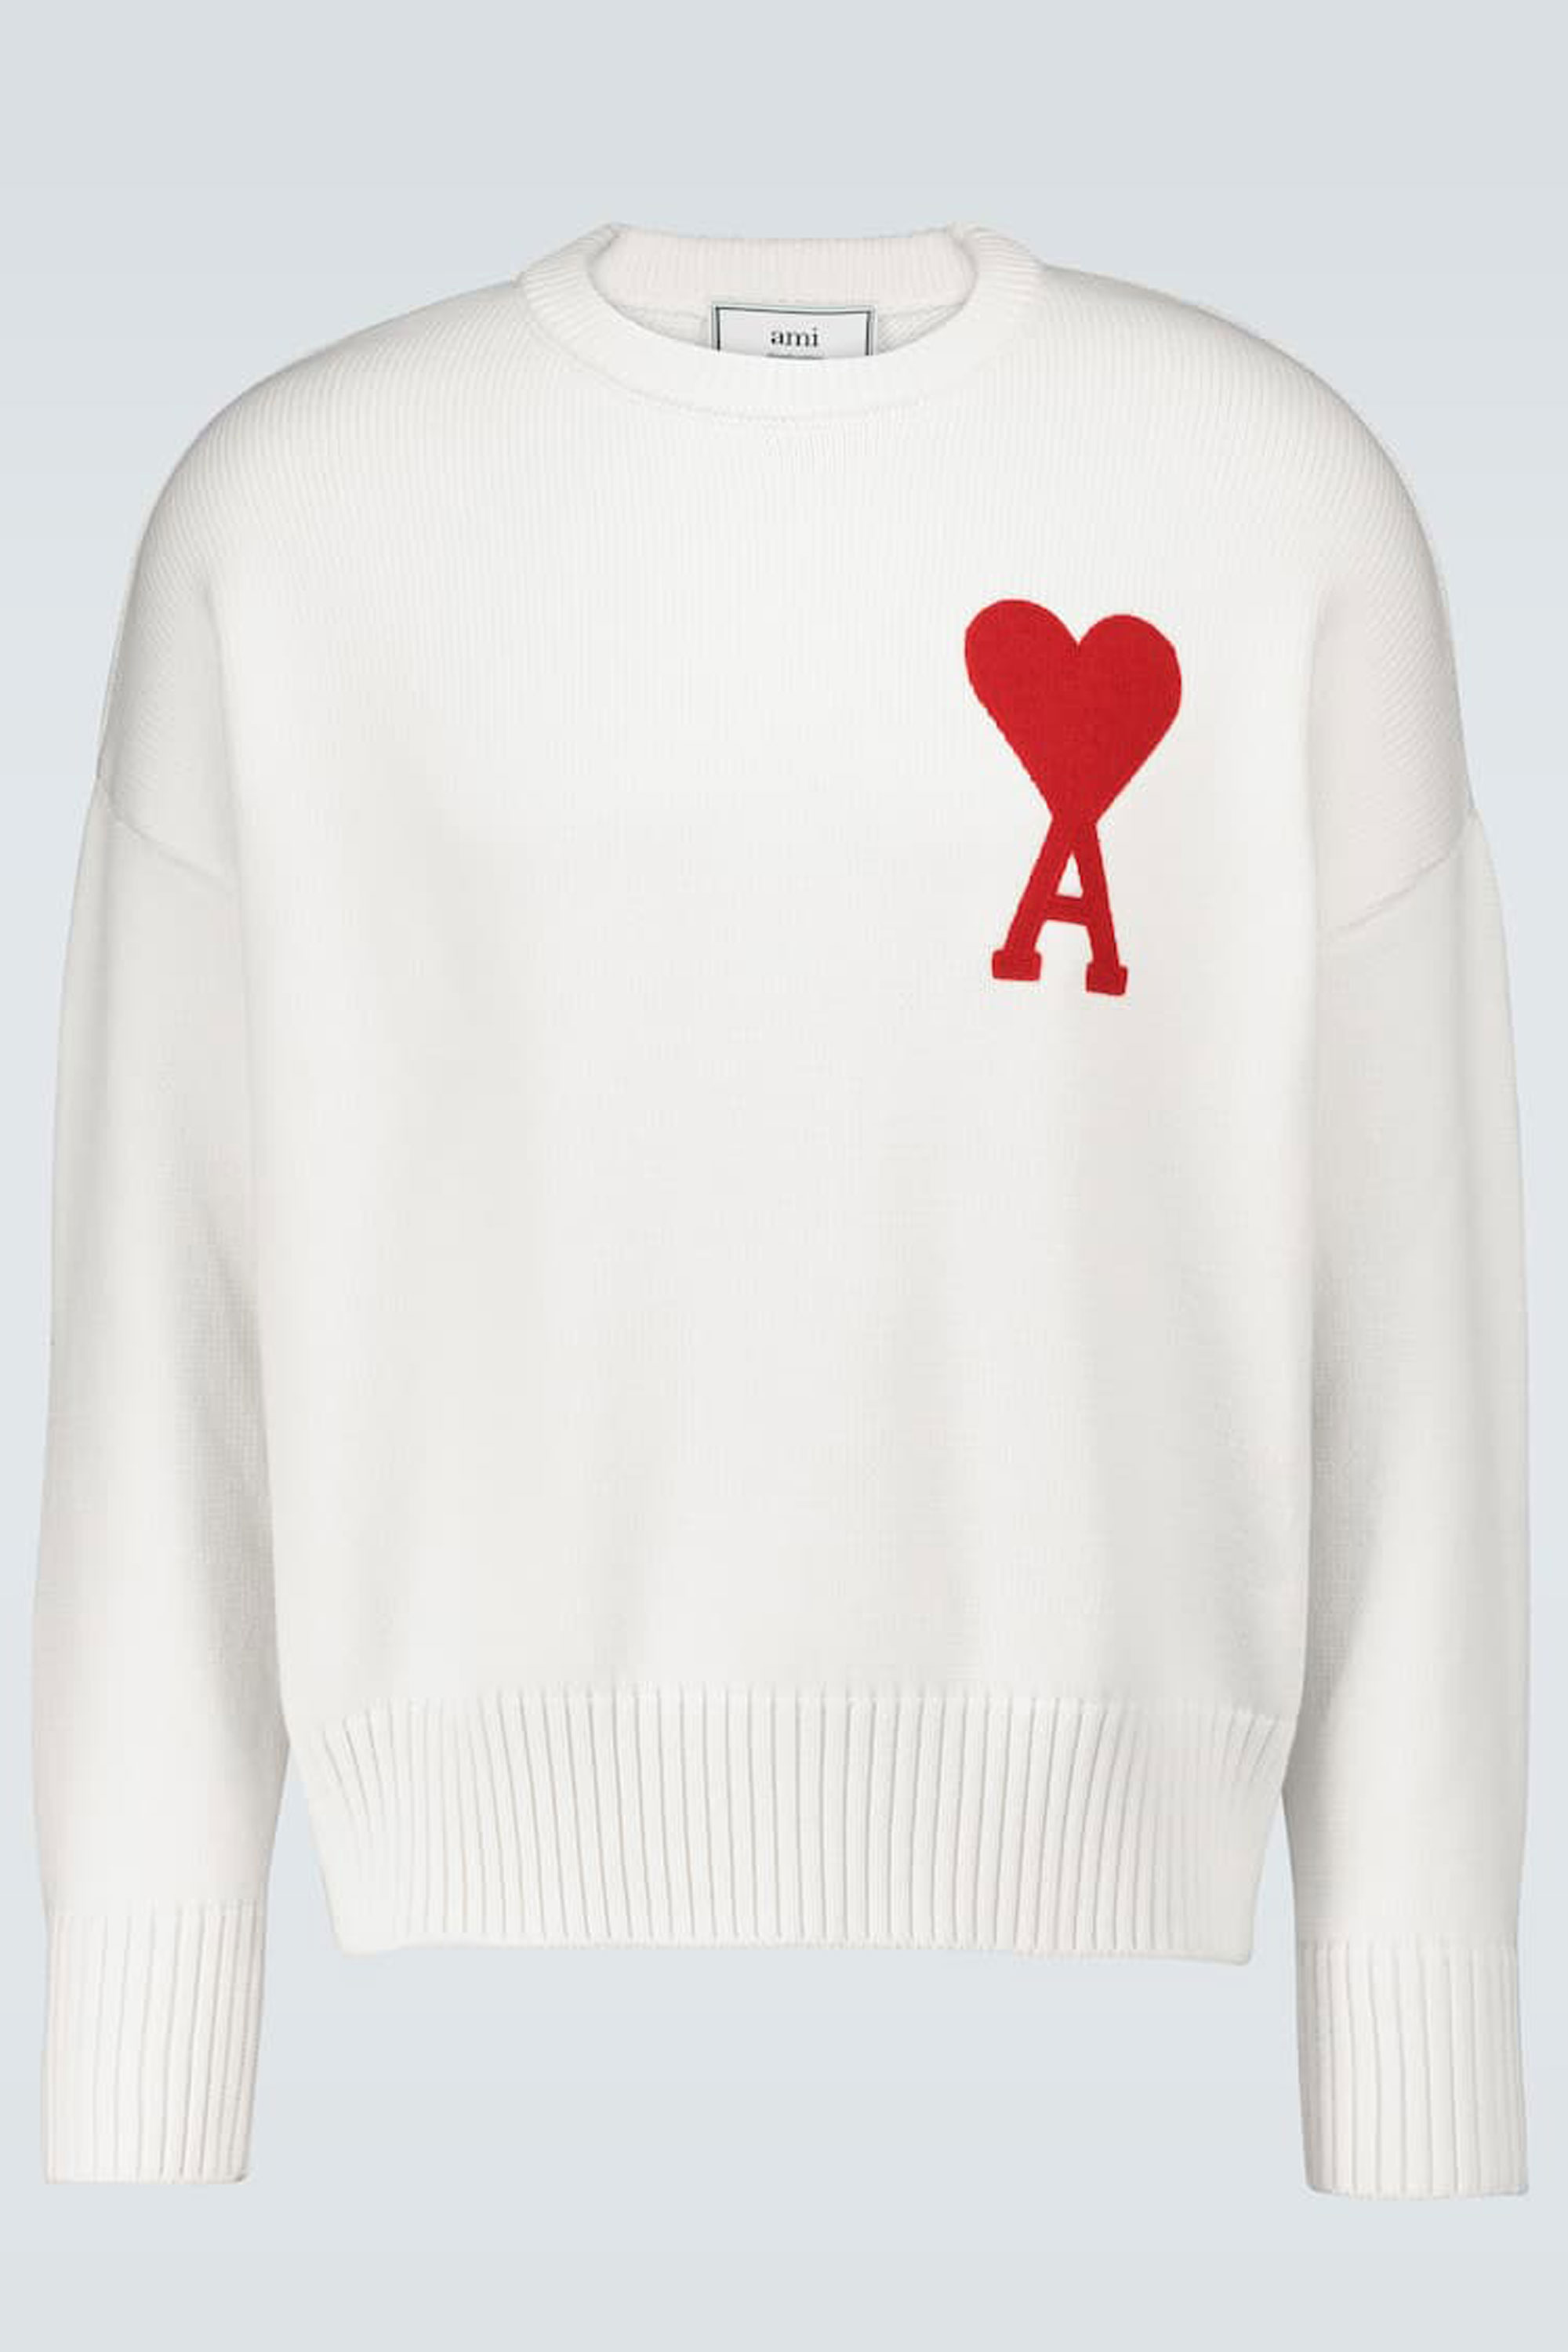 Ami Intarsia Crewneck Sweater.(인타르시아 니트) 2 corlor (White&amp;Brown) 예약시 원하시는 색상기입 해주세요. 발매전 게시글 예약시 5%할인쿠폰 증정